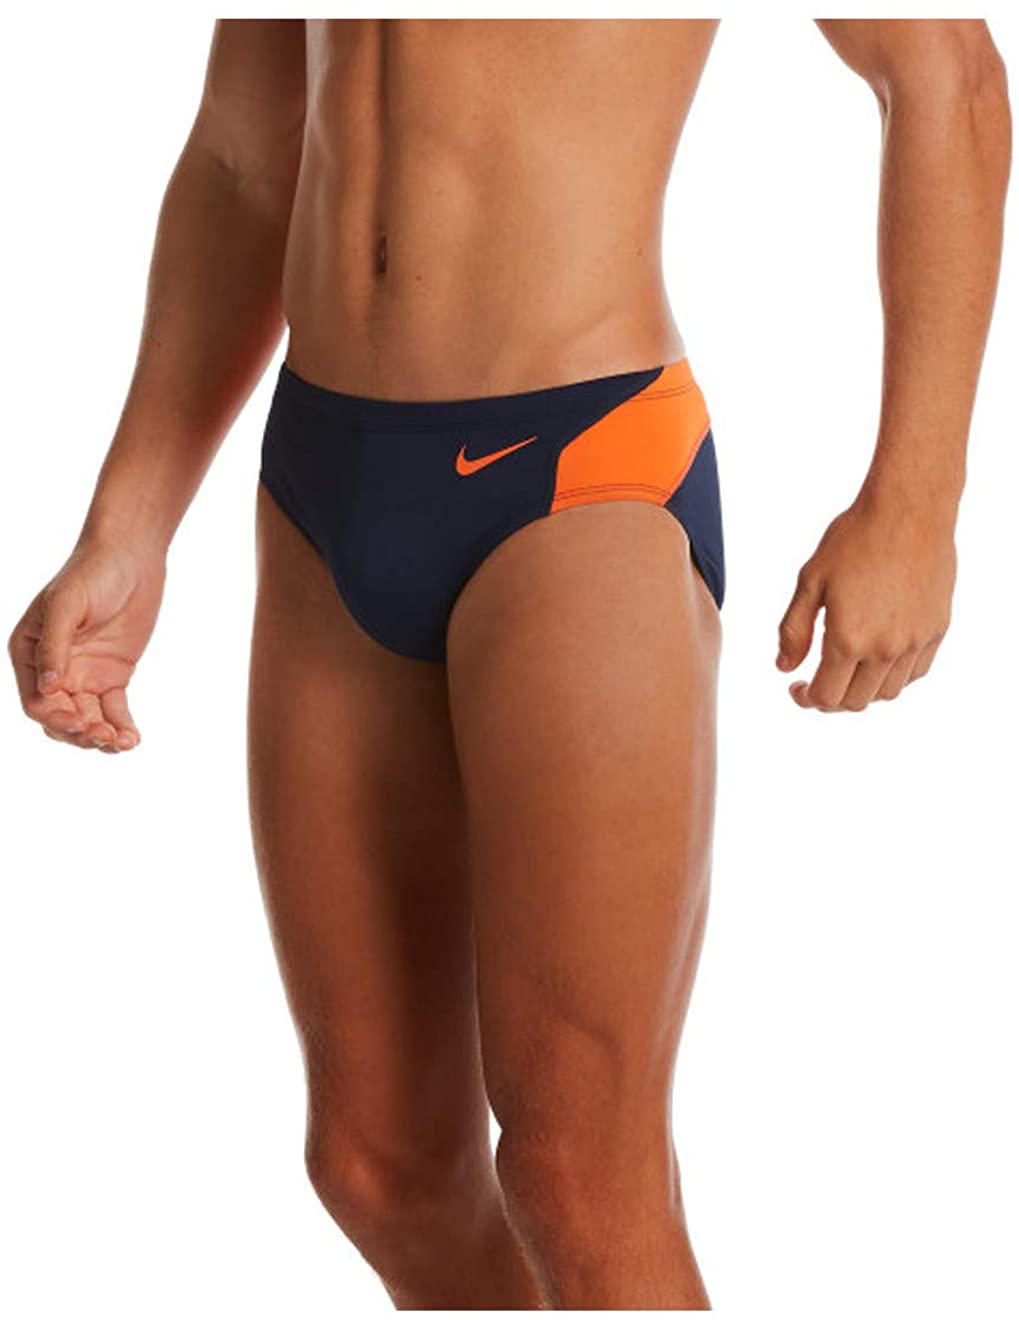 Men's Nike Swim Vex Brief in Team Orange